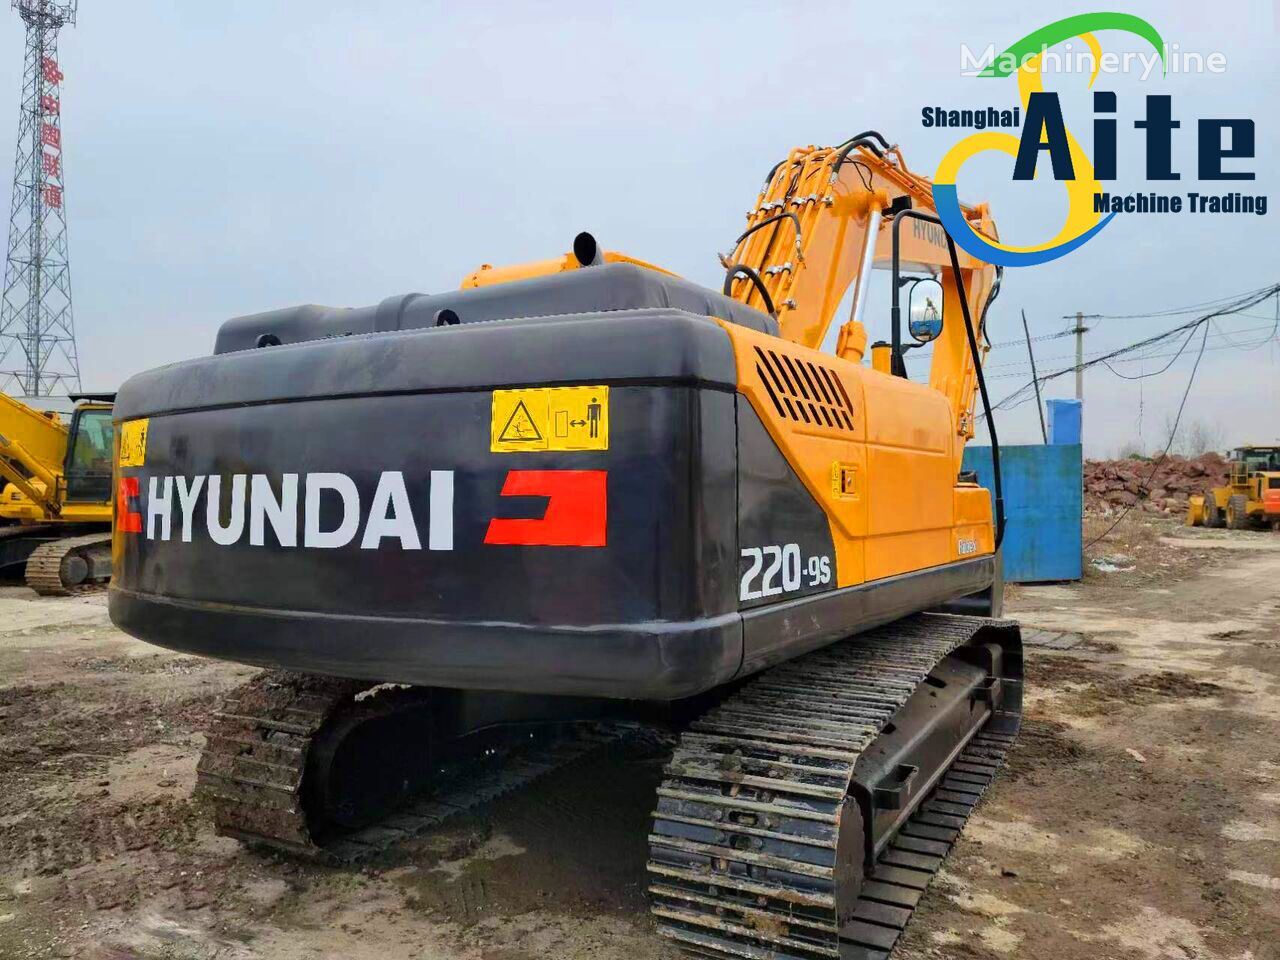 Hyundai R220-9s tracked excavator